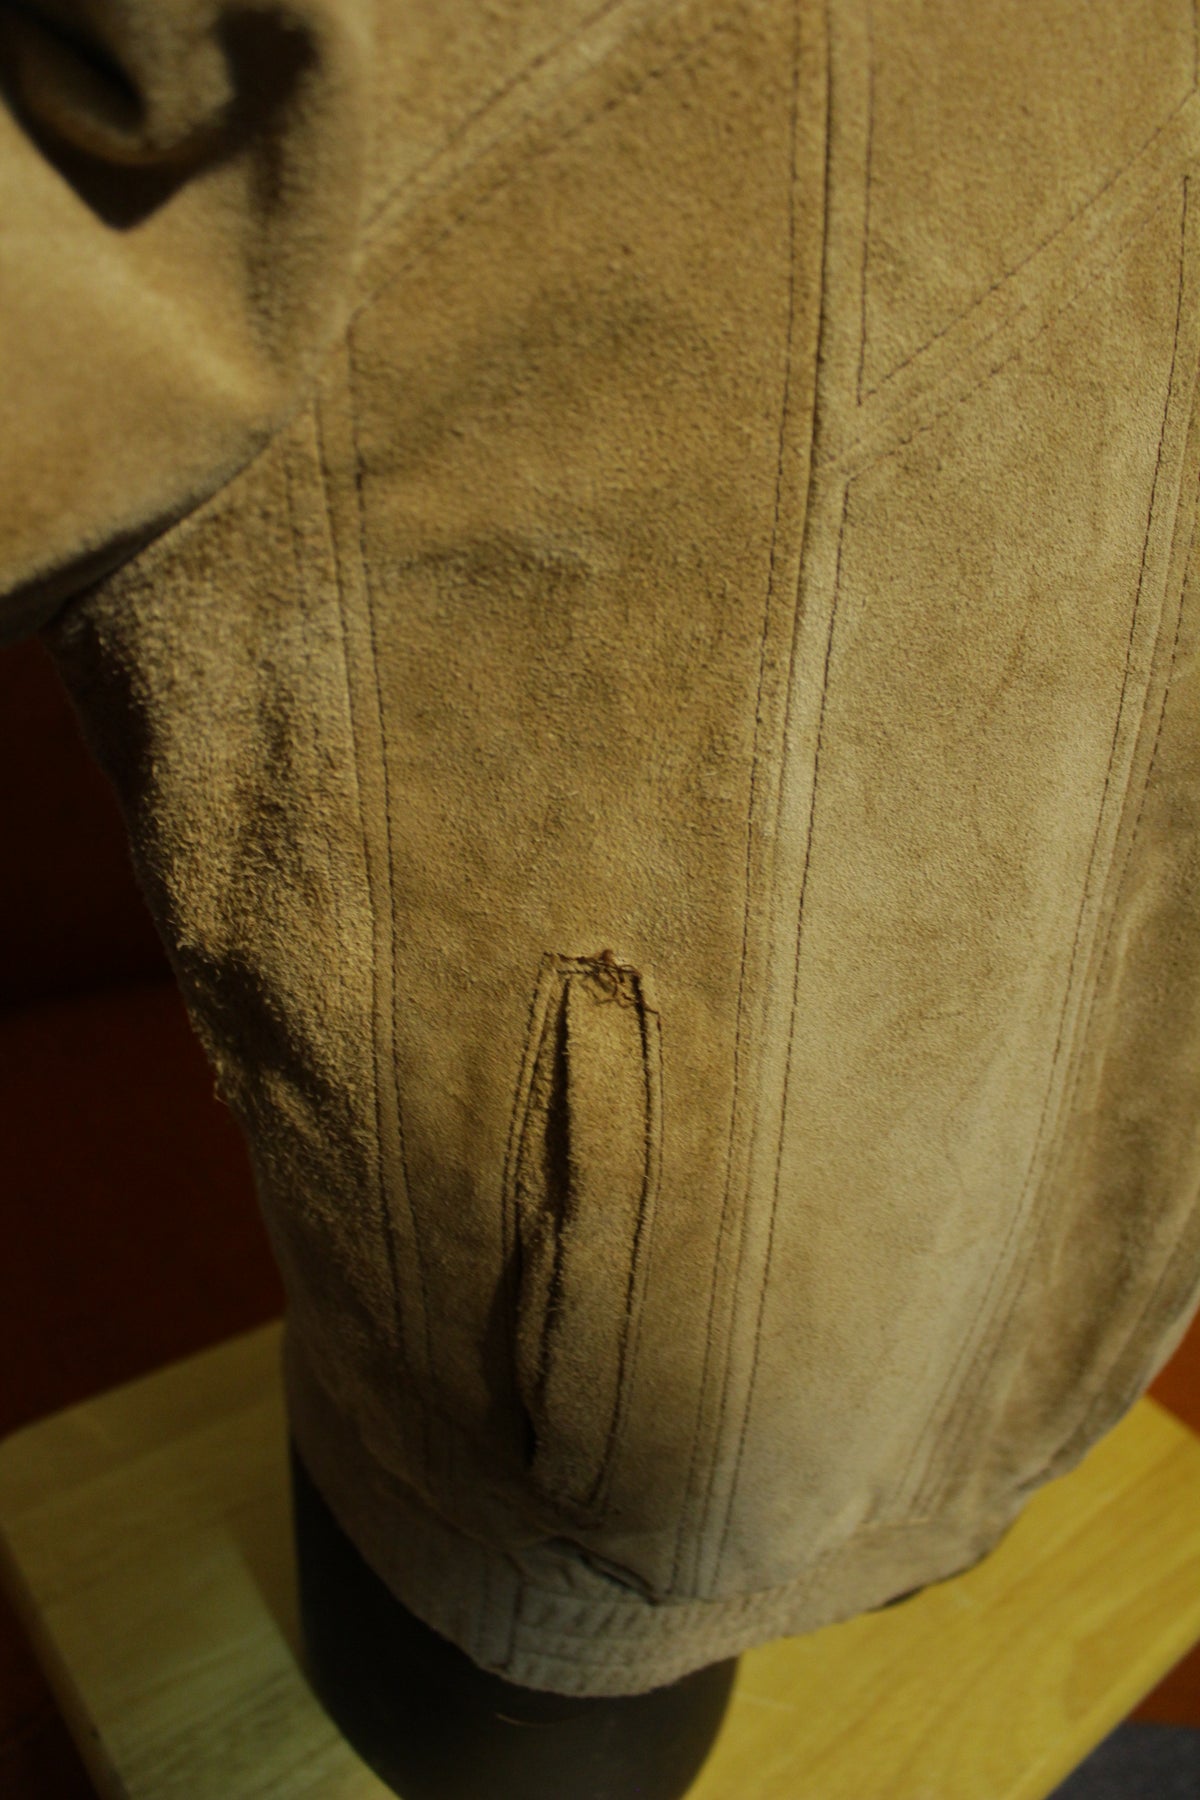 Genuine Leather Hecho En Mexico Vintage 70's Bomber Jacket Suede Coat